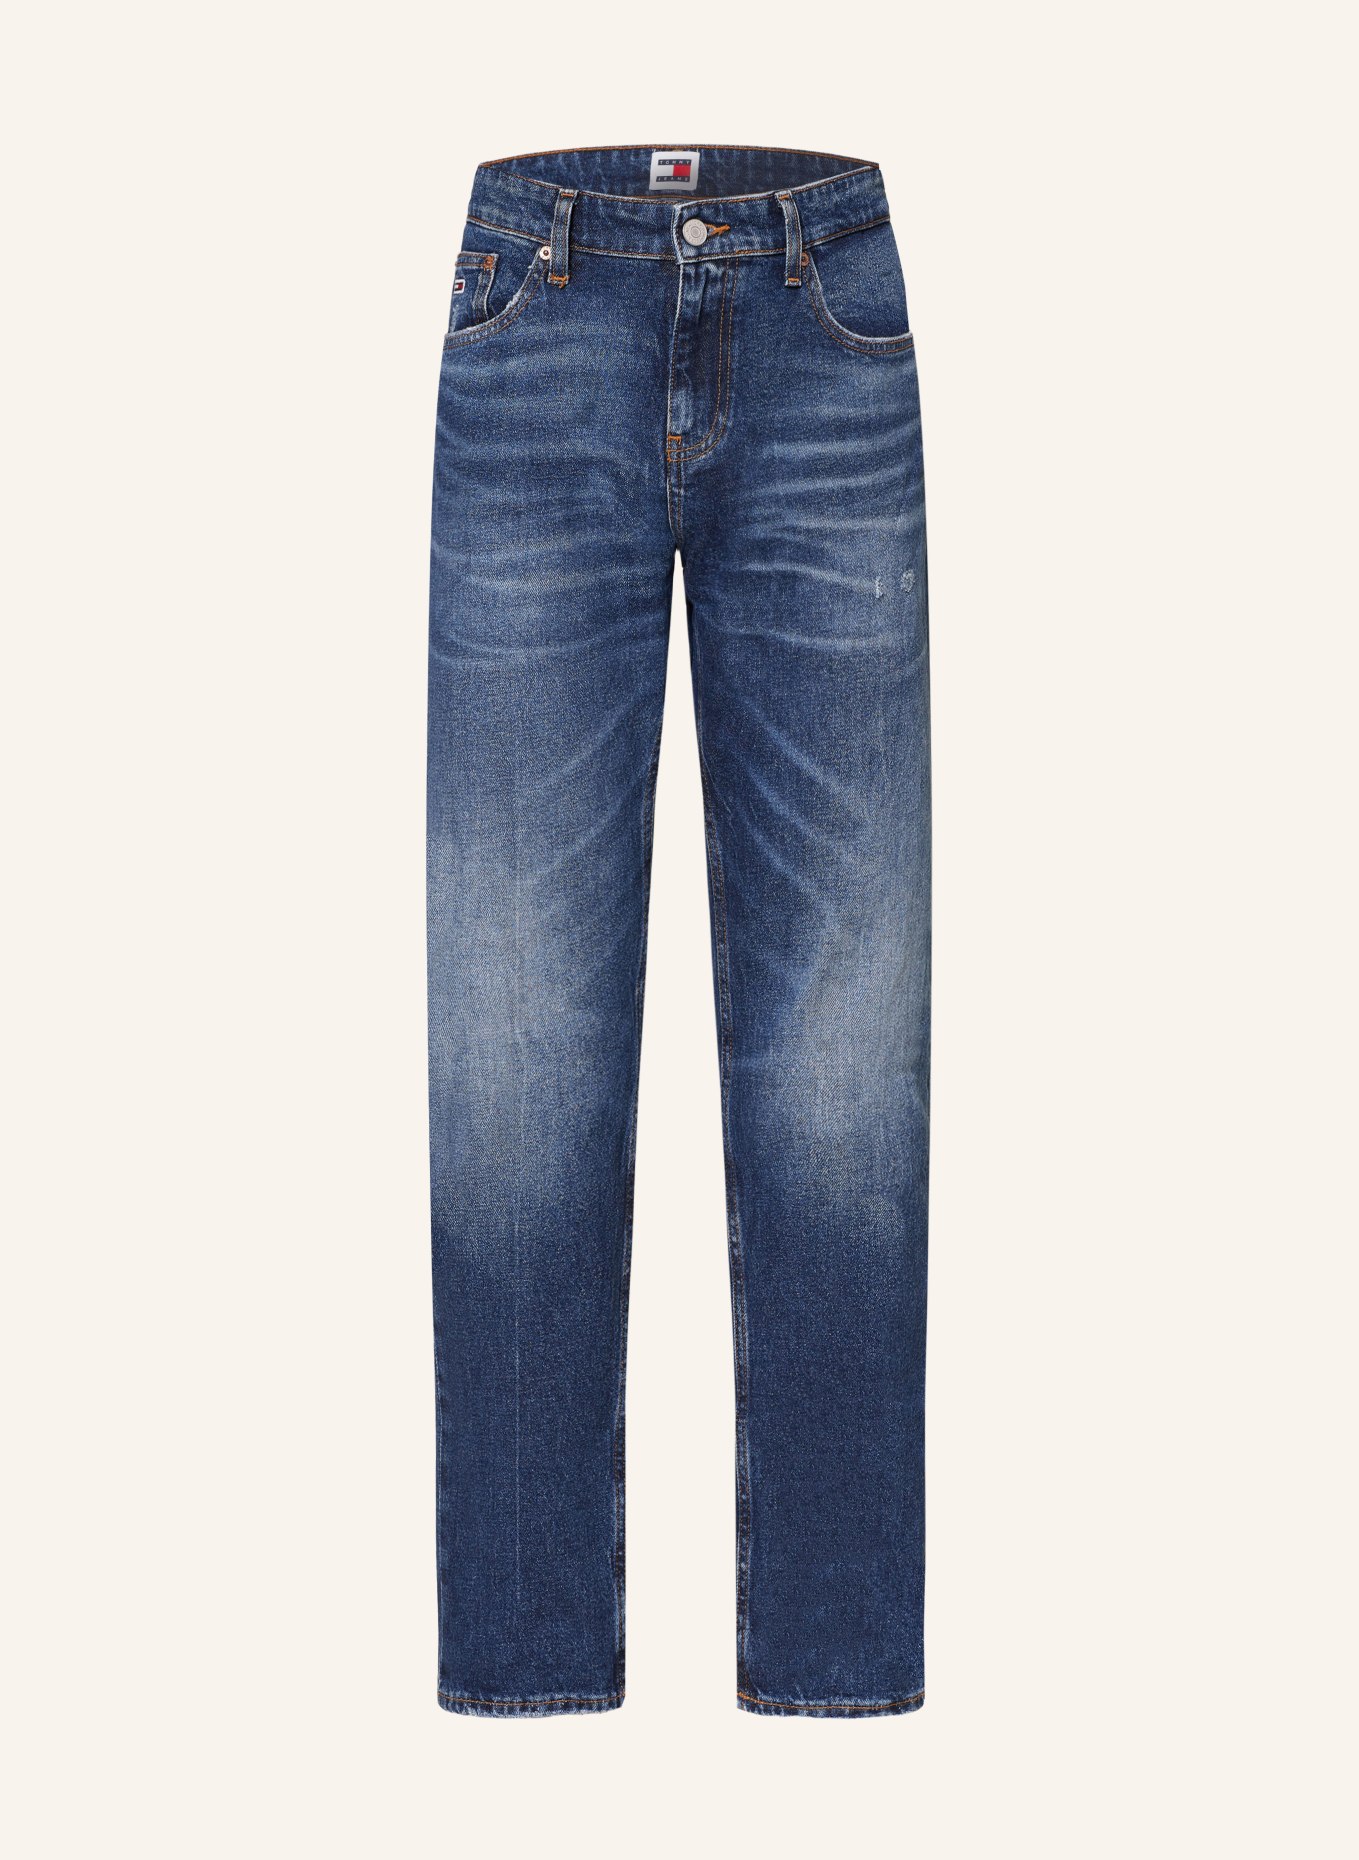 TOMMY JEANS Jeans RYAN Straight Fit, Farbe: 1BK Denim Dark (Bild 1)